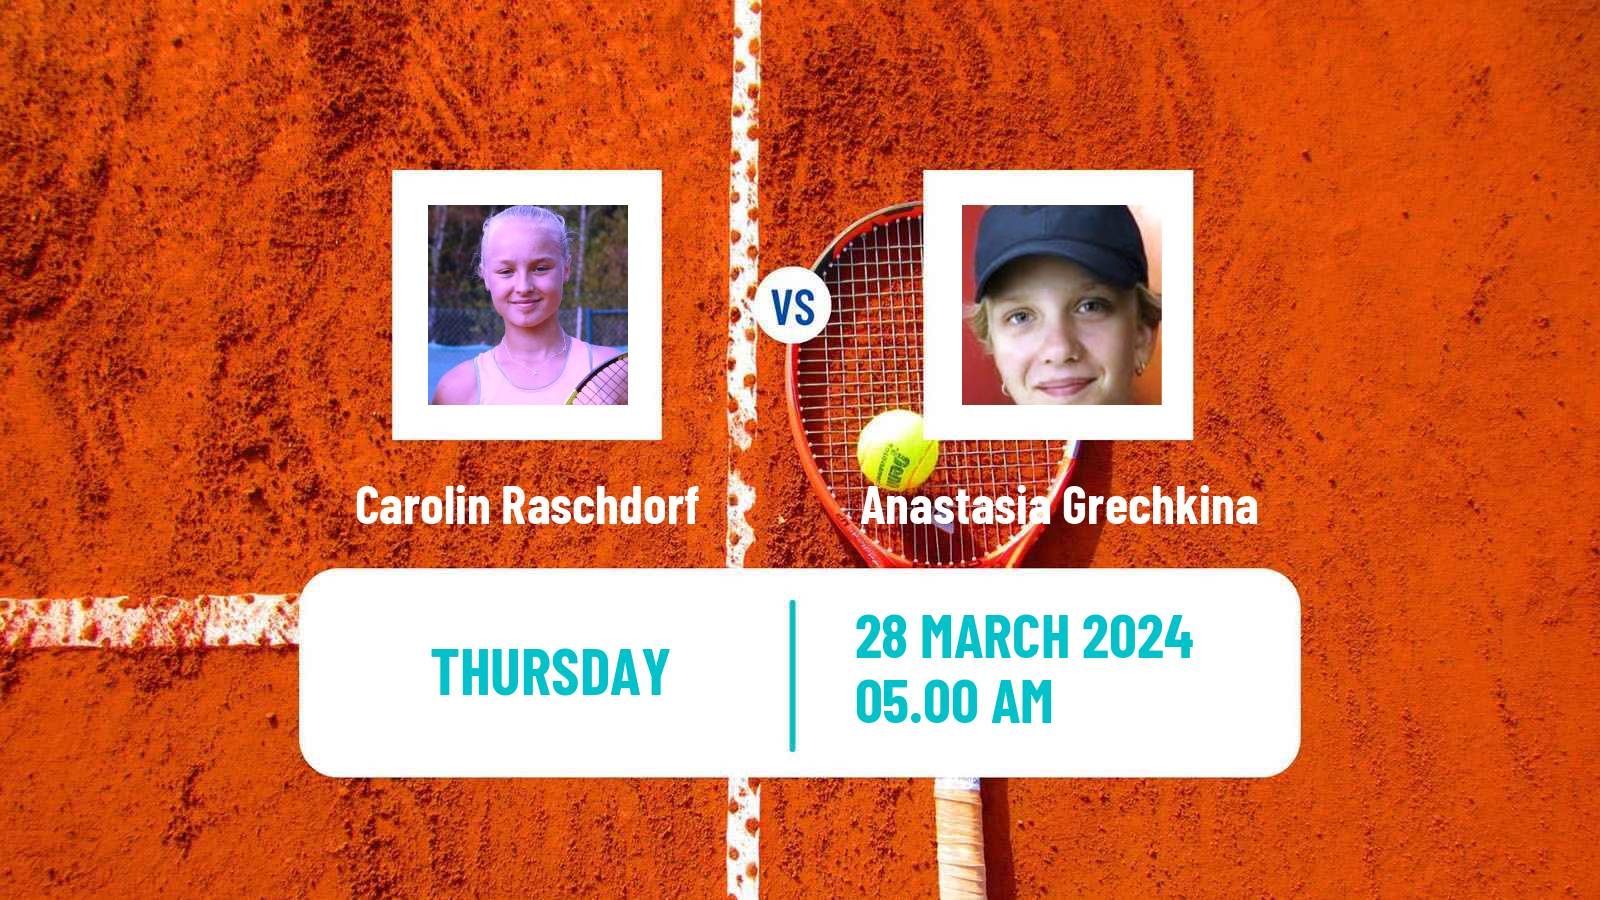 Tennis ITF W15 Antalya 7 Women Carolin Raschdorf - Anastasia Grechkina